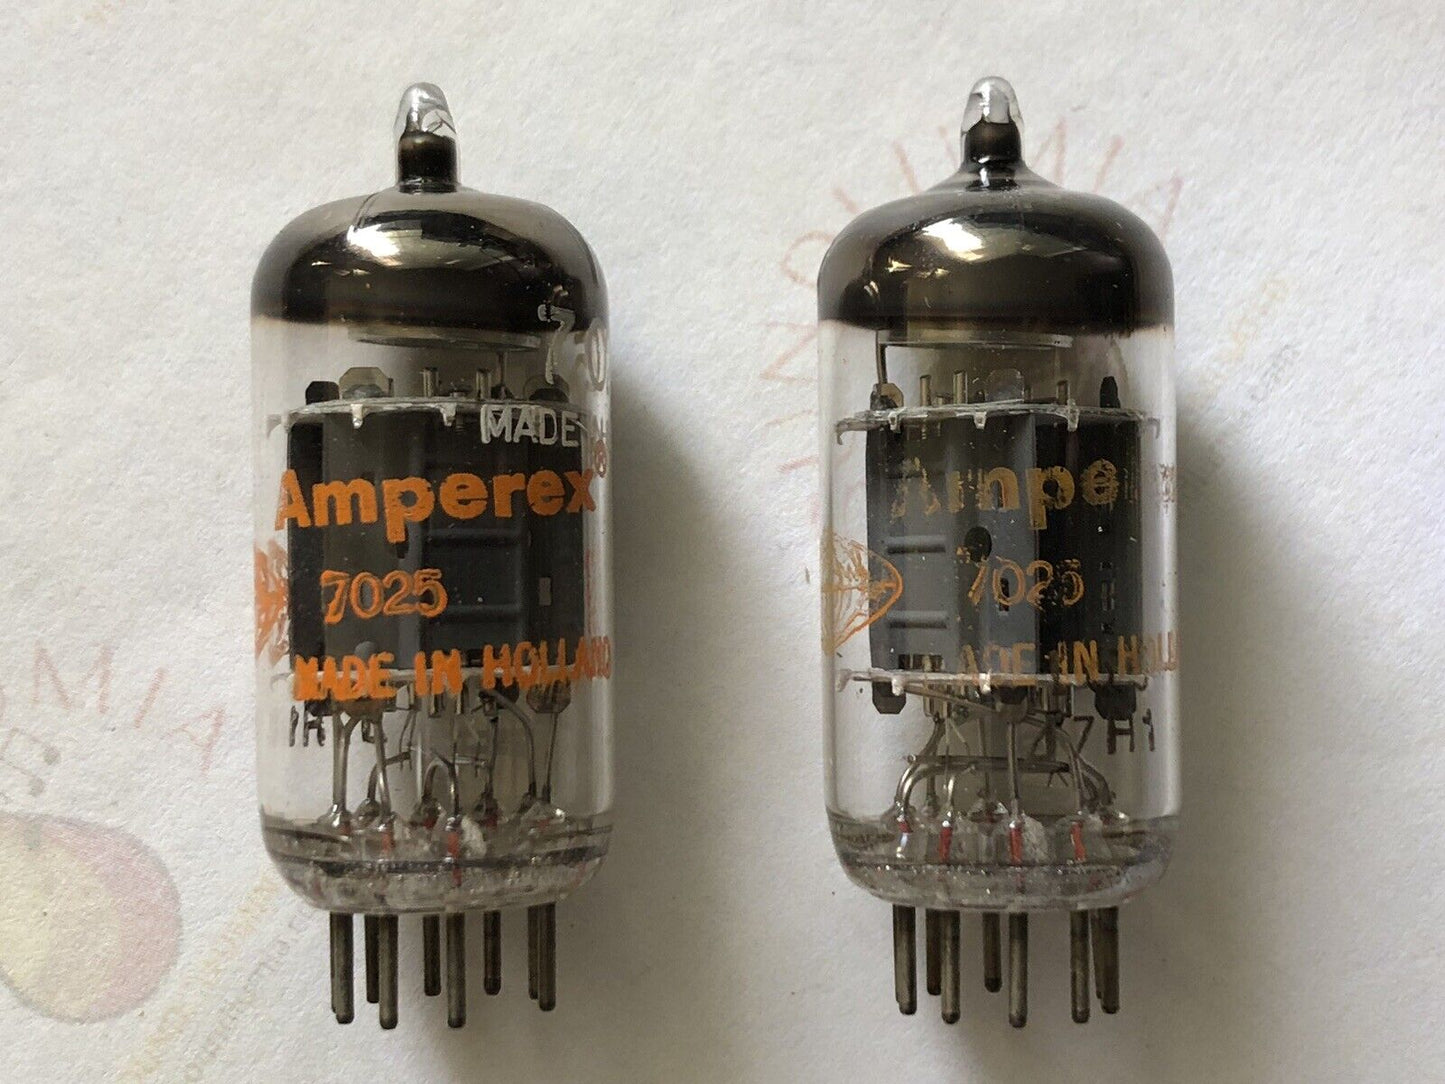 Amperex 7025 12AX7 Matched Pair - Holland 1967 - Orange Globe - Same code - NOS